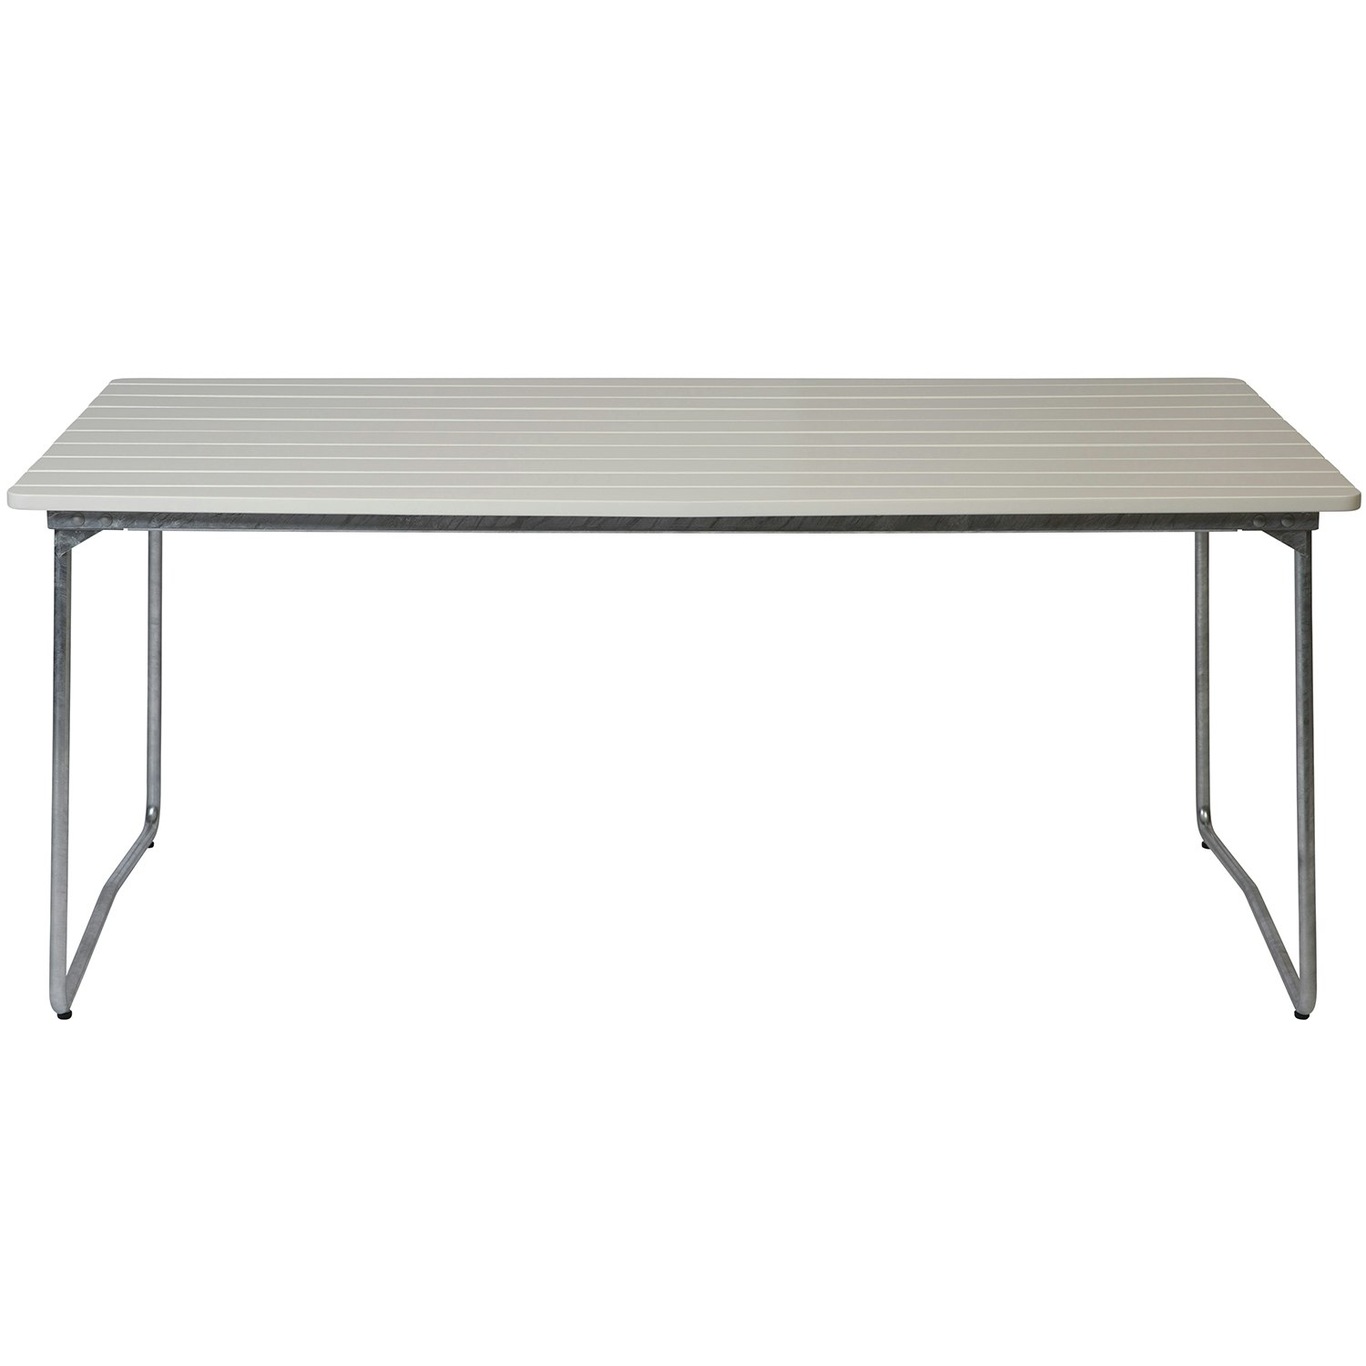 B31 Table 92x170 cm, White Lacquered Oak / Hot Galvanized Steel